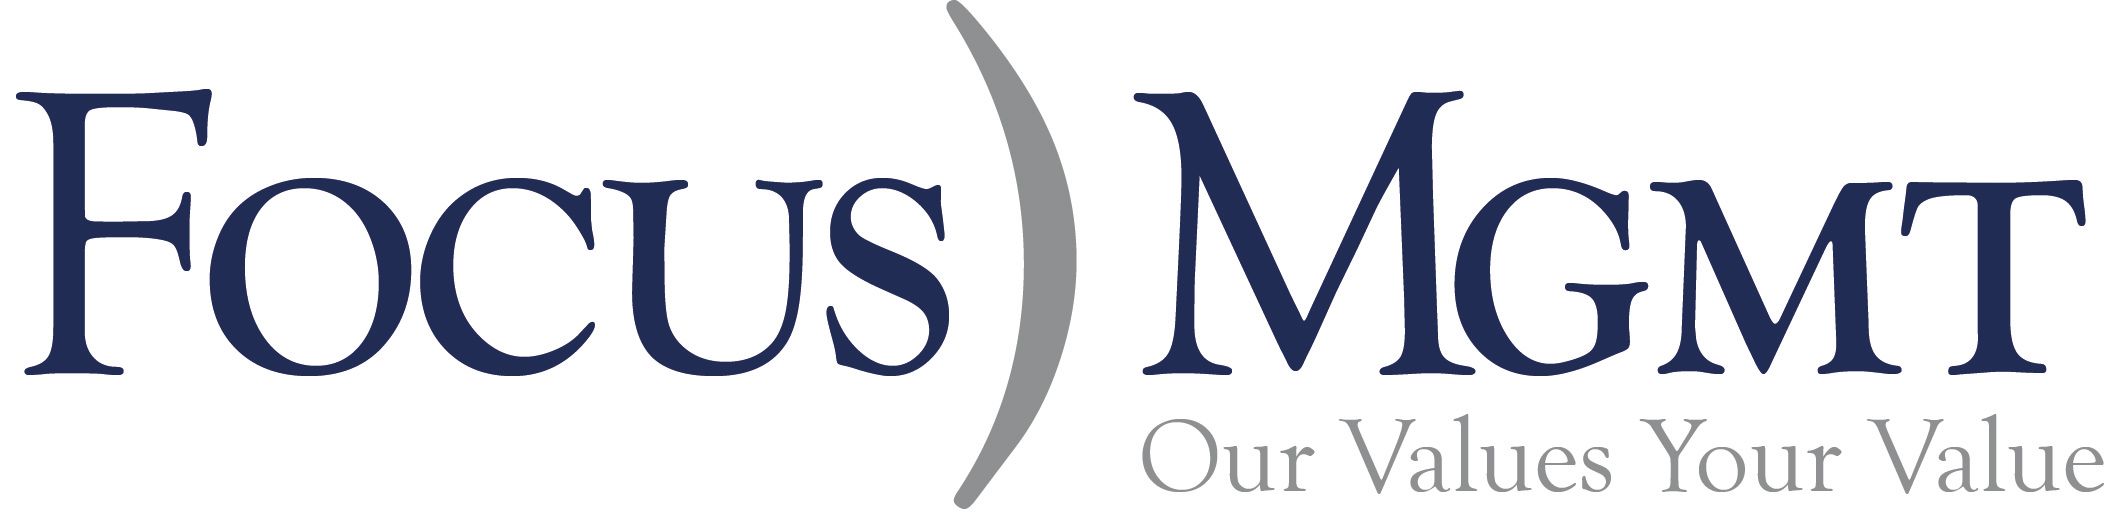 Focus Mgmt logo